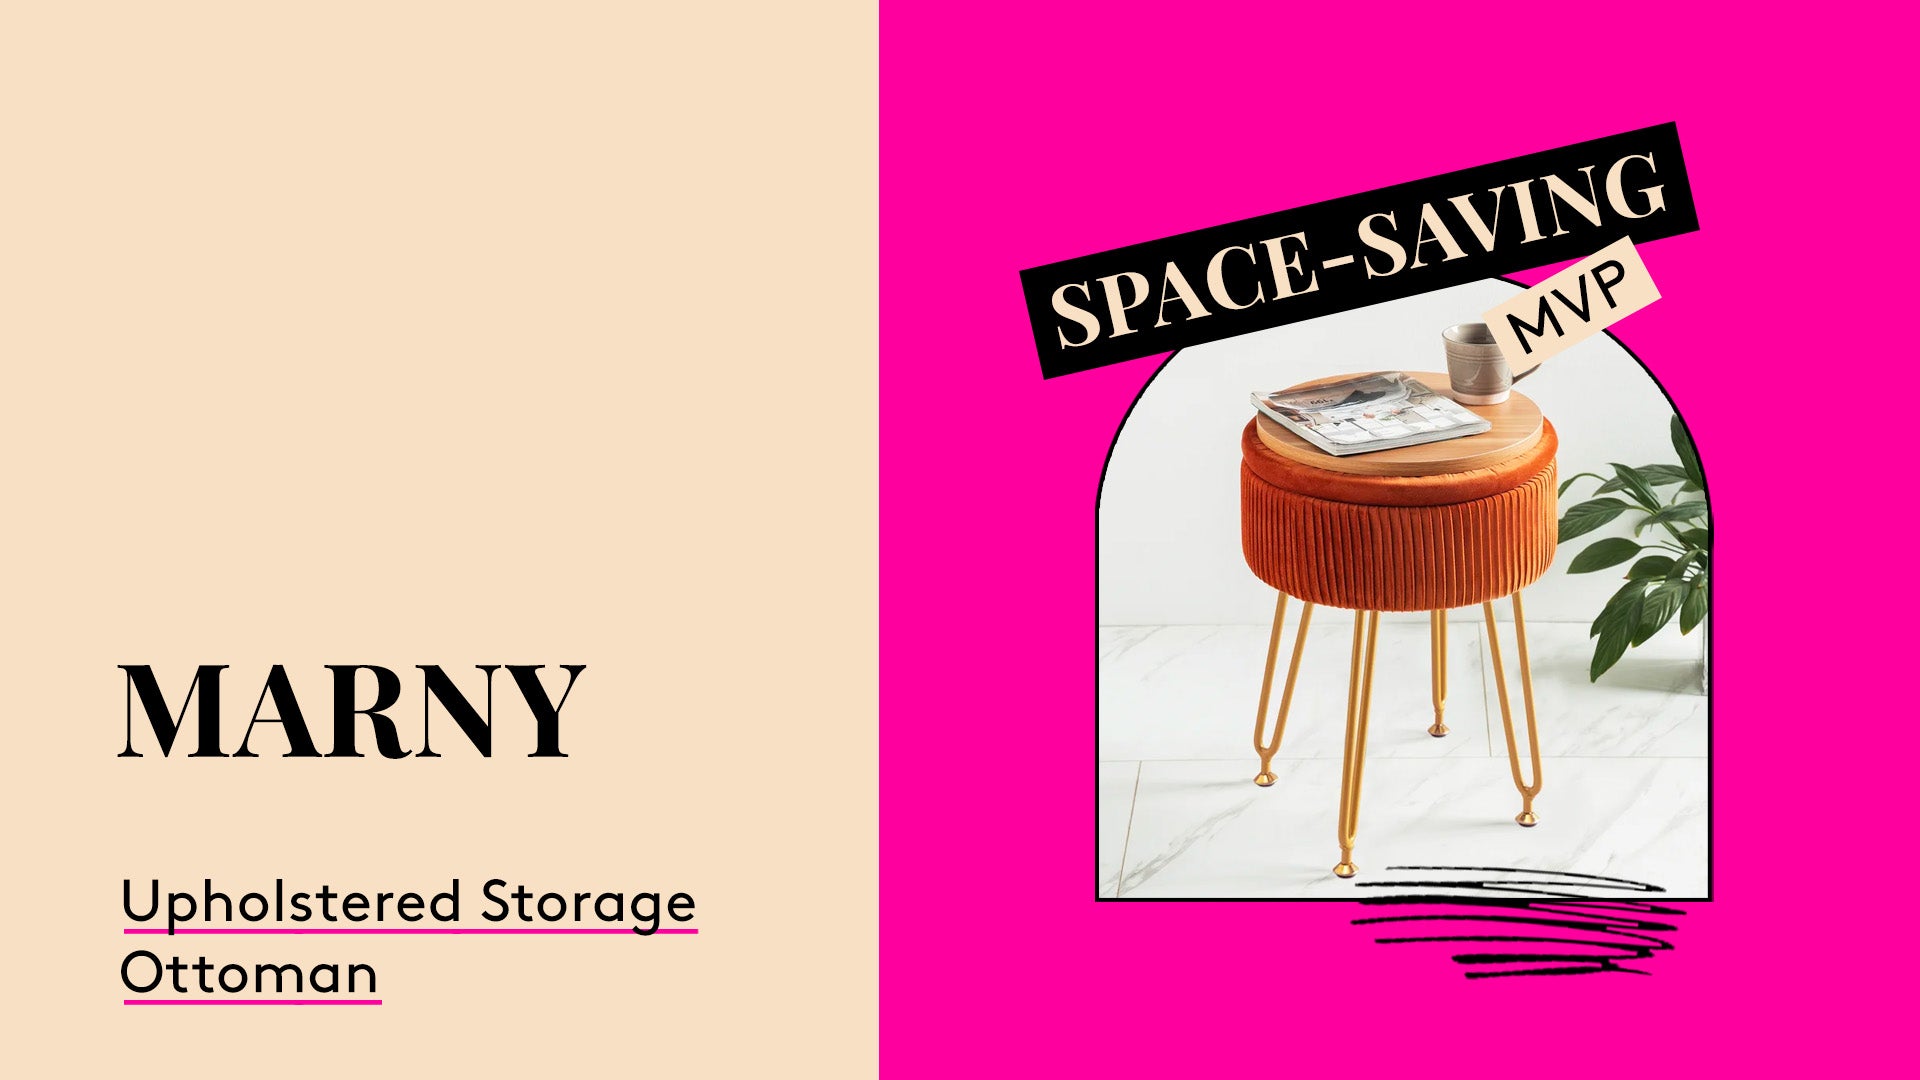 Space Saver MVP. Marny Upholstered Storage Ottoman.